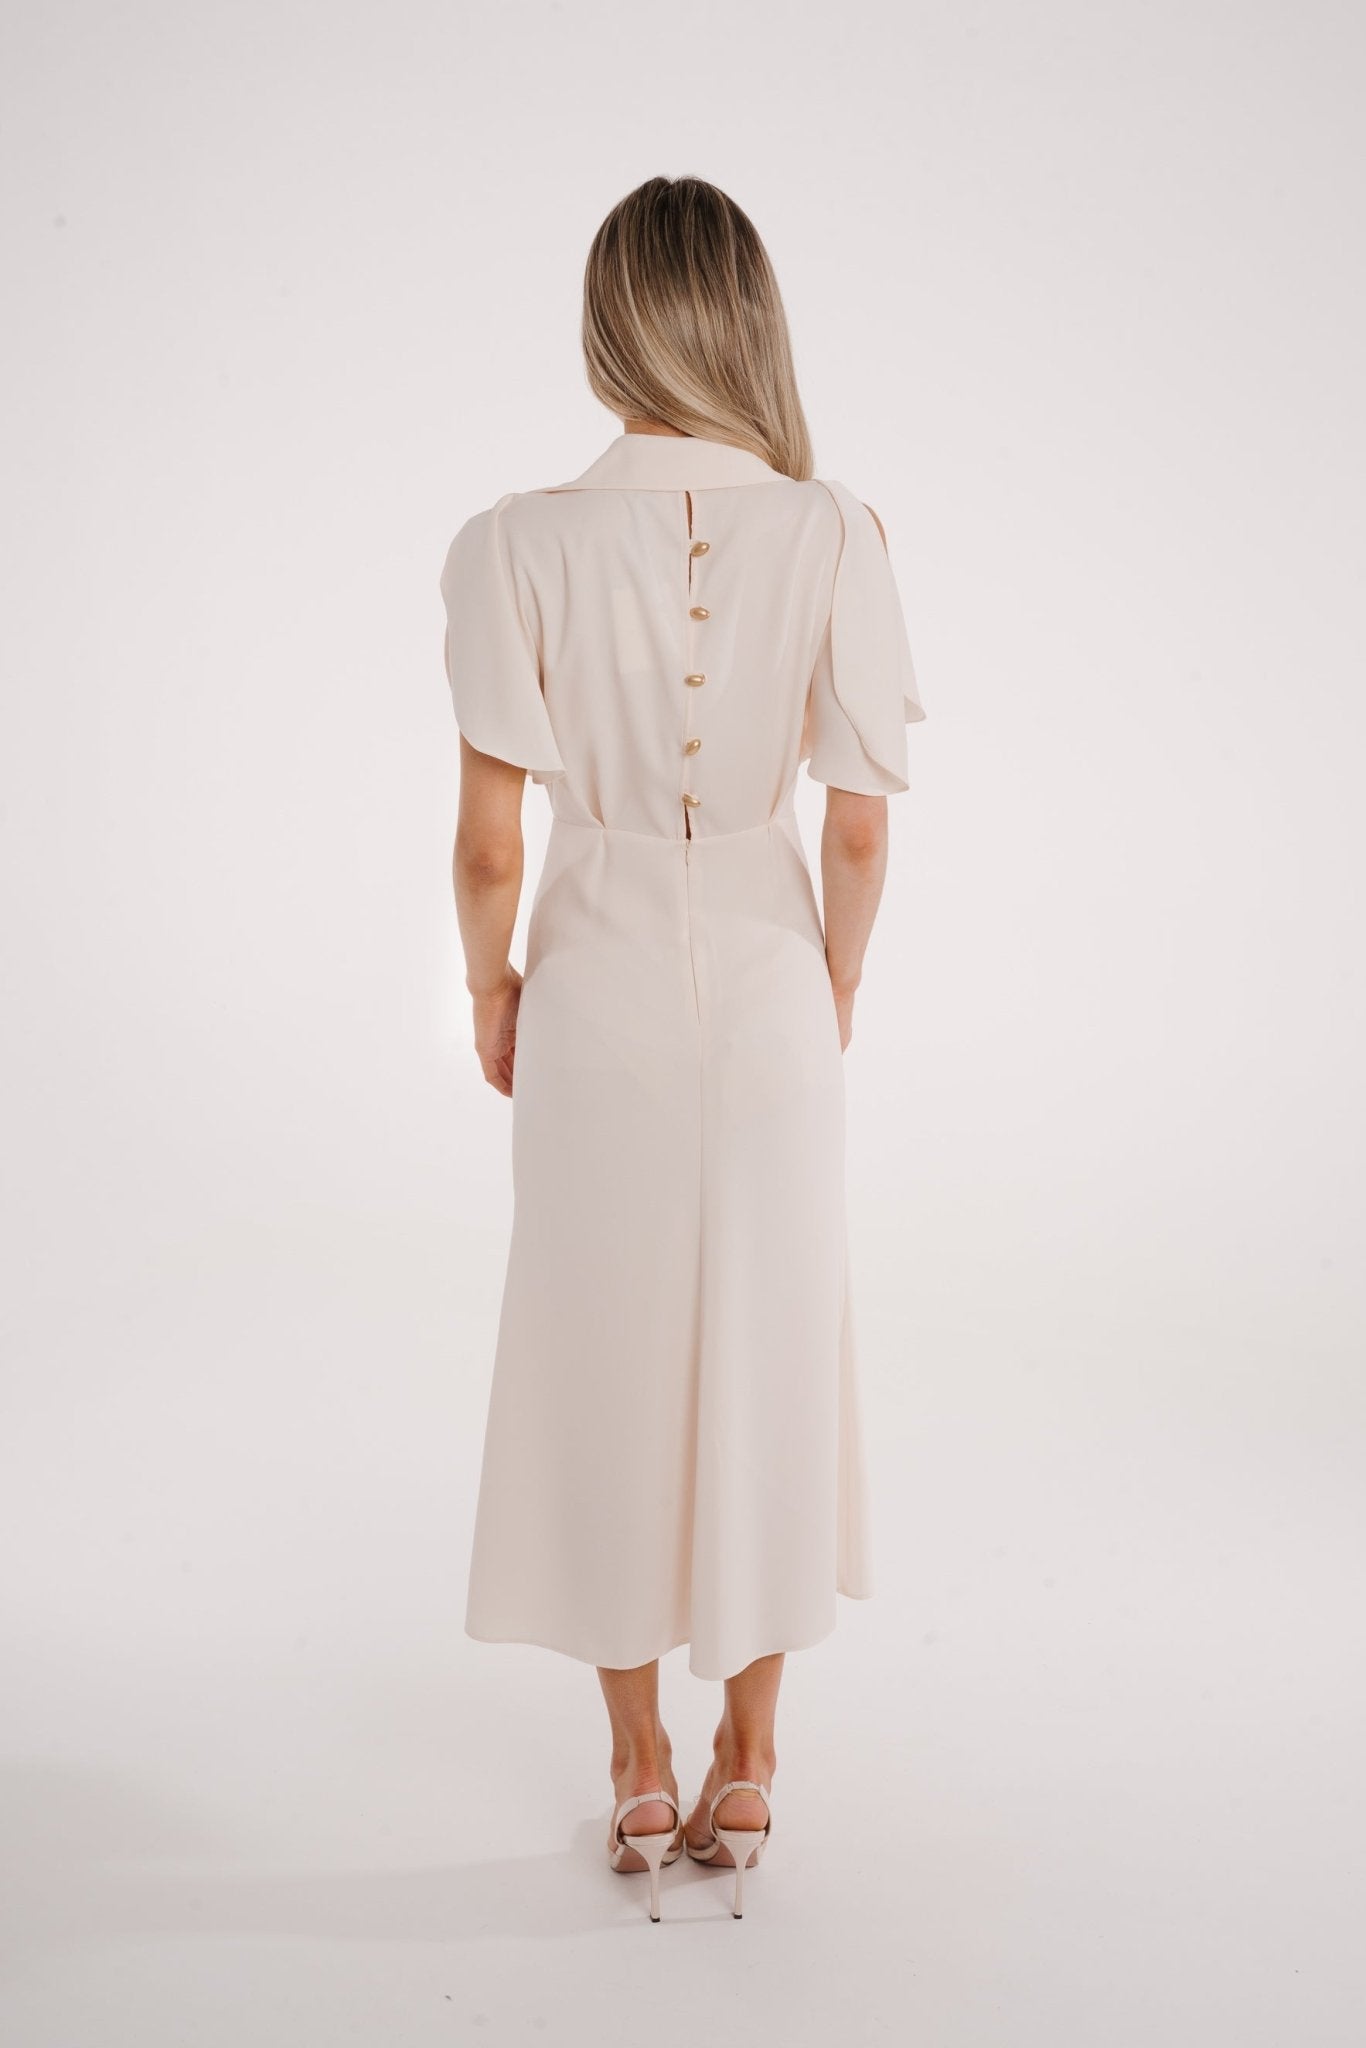 Kayla Button Back Dress In Cream - The Walk in Wardrobe